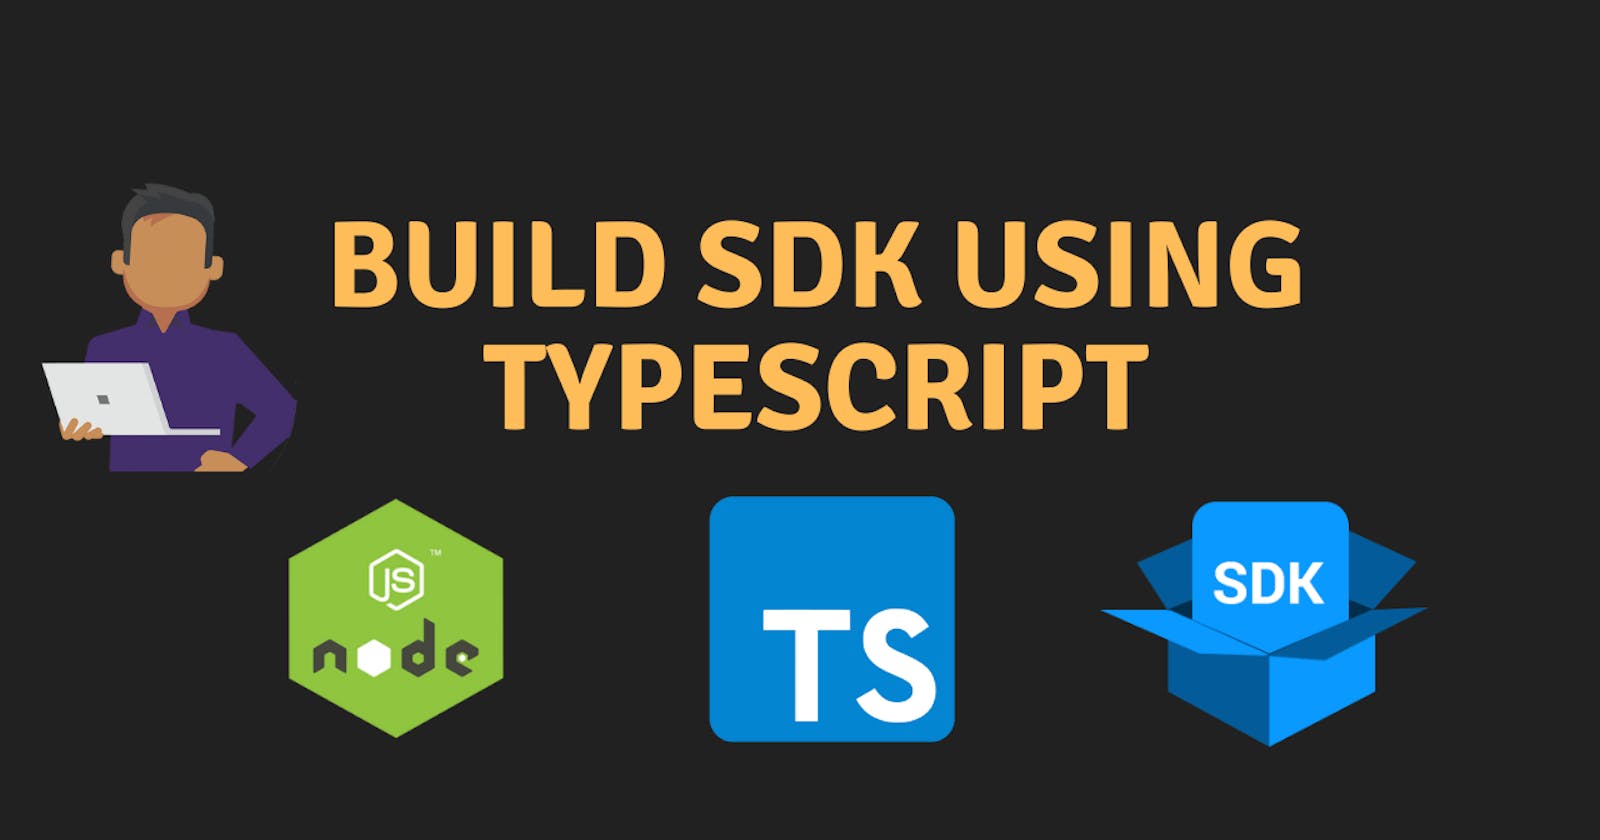 Building an SDK with TypeScript